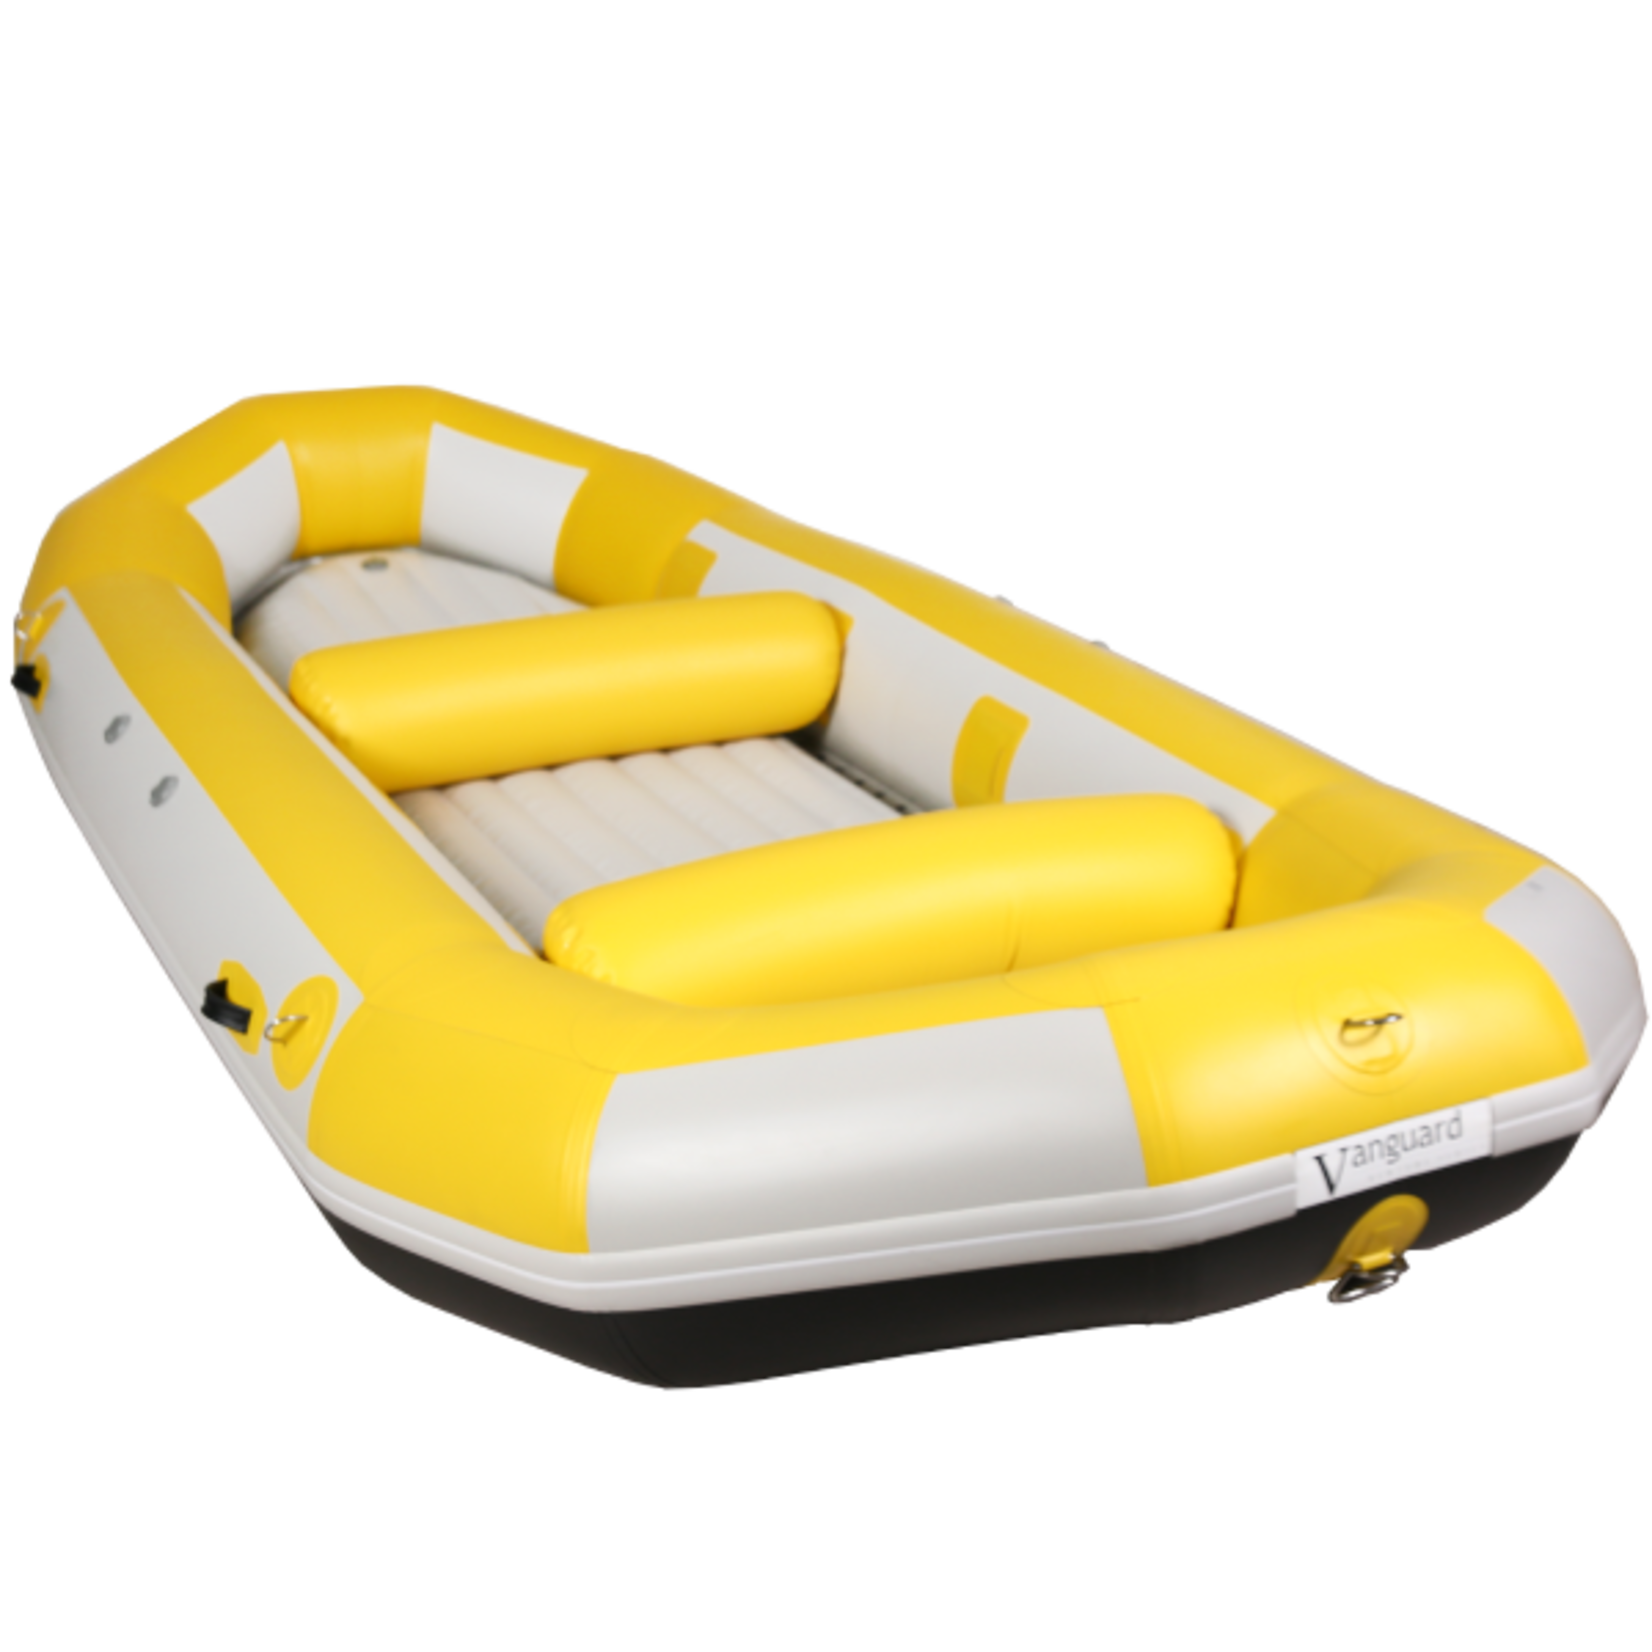 Vanguard Inflatables Vanguard Venture Series 1600 Self Bailing Raft